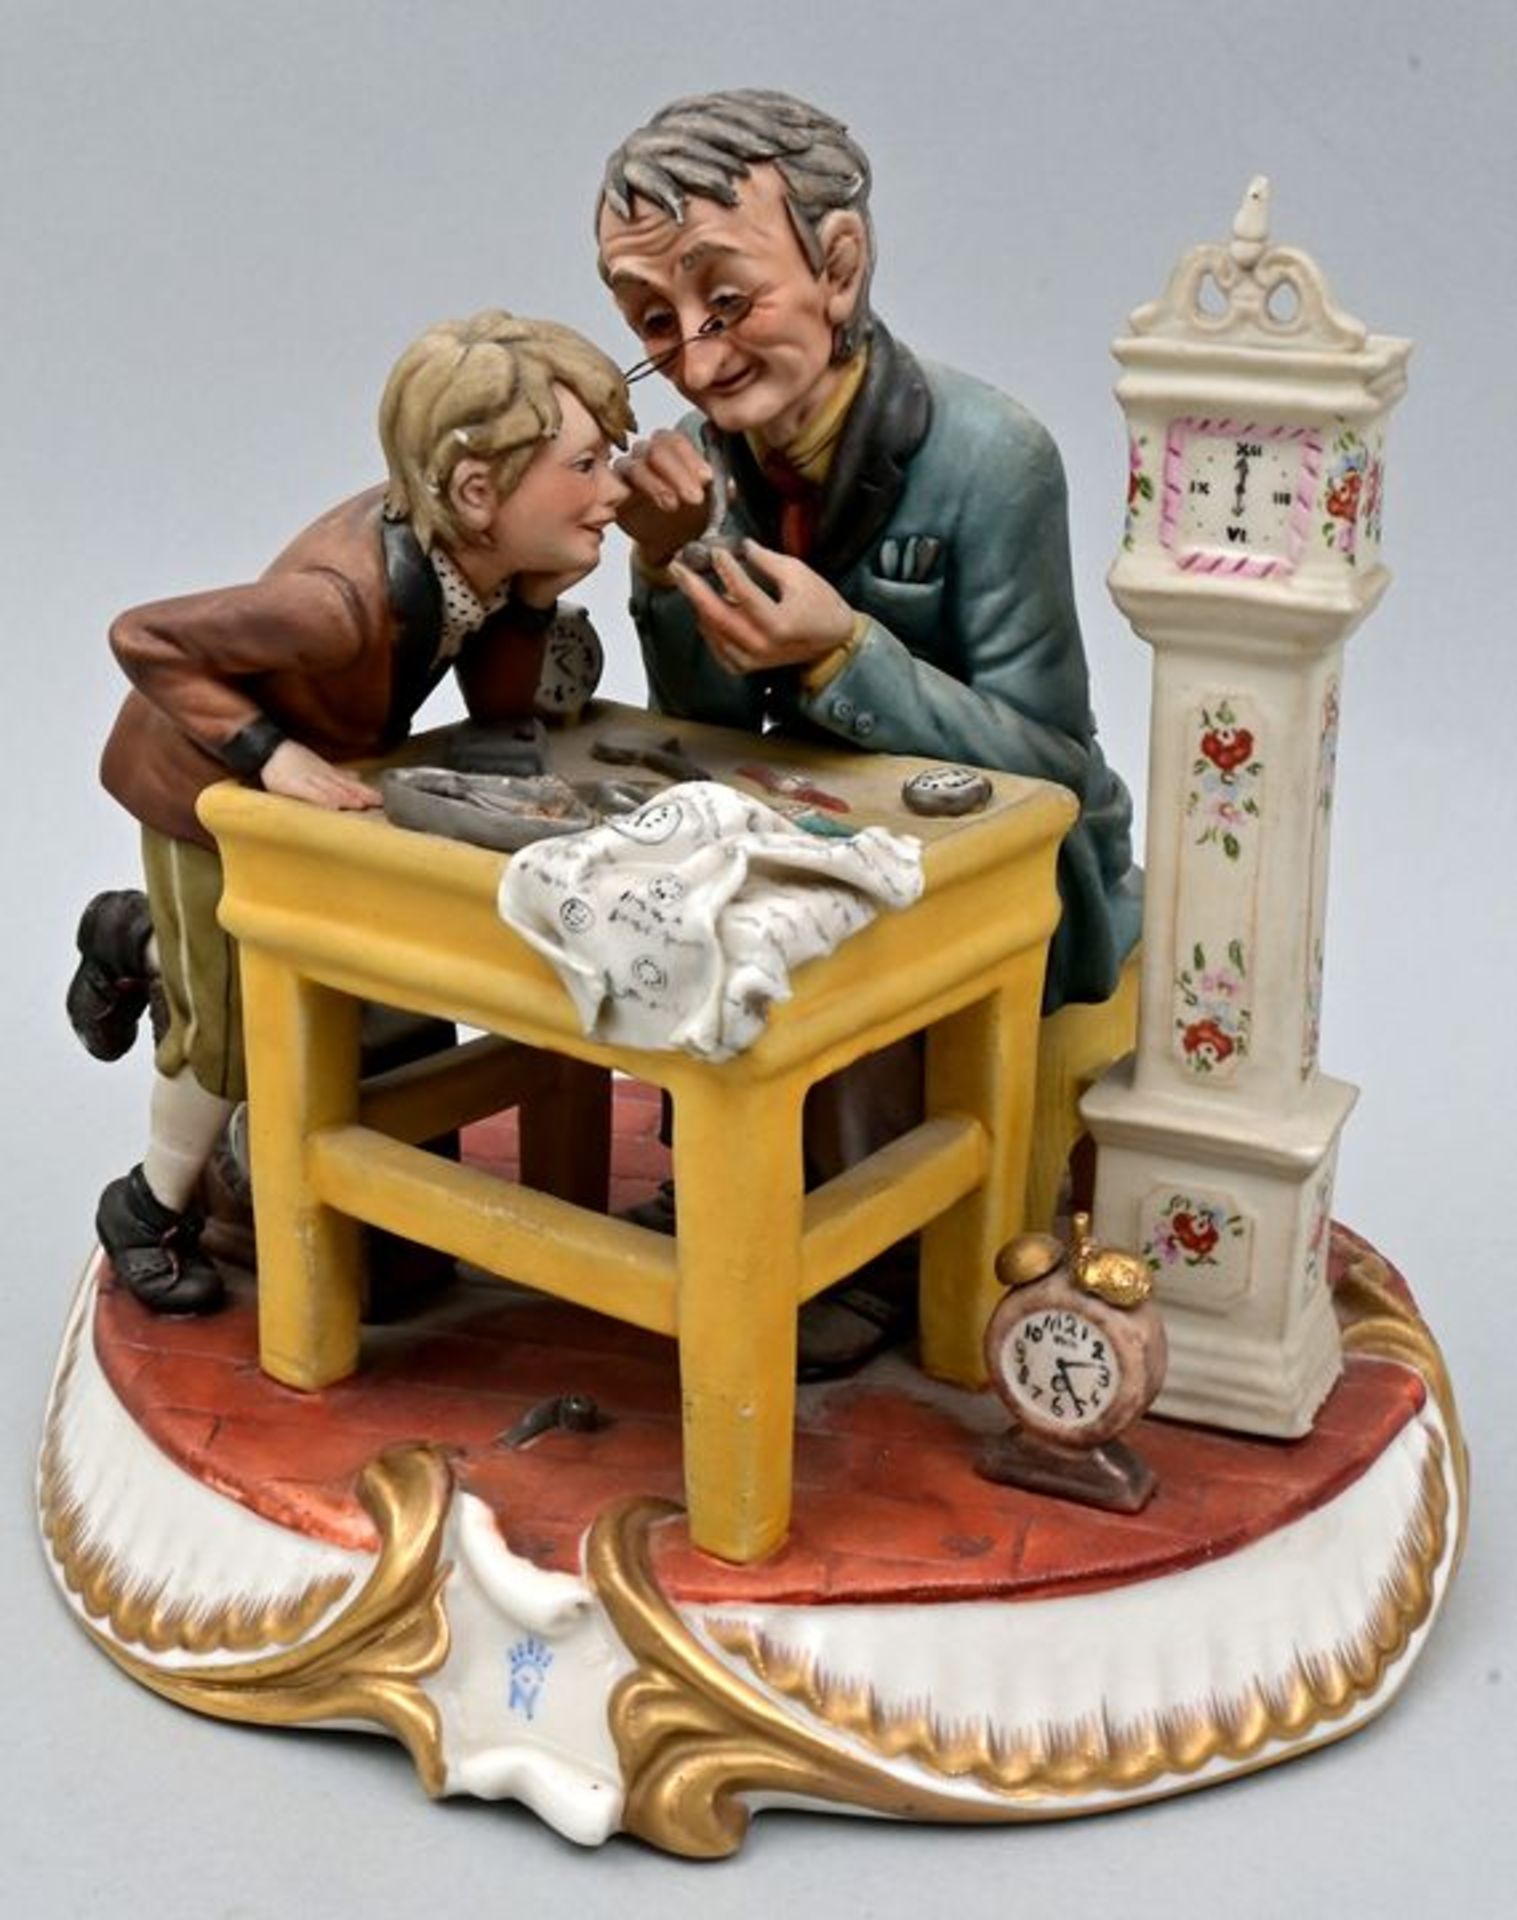 Figurengruppe "Der Uhrmacher" / Porcelain figure